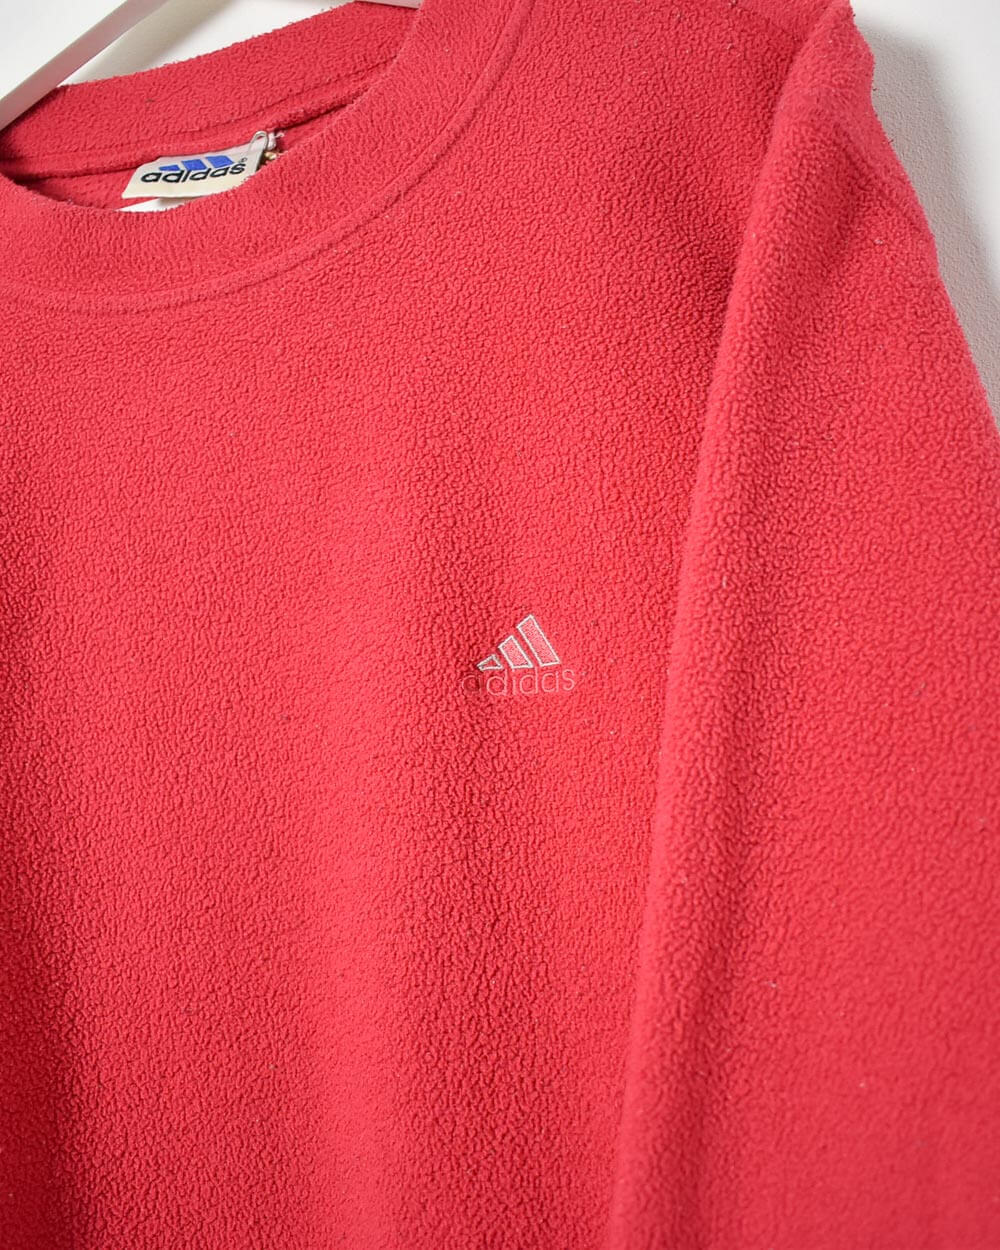 Adidas Pullover Fleece - Medium - Domno Vintage 90s, 80s, 00s Retro and Vintage Clothing 